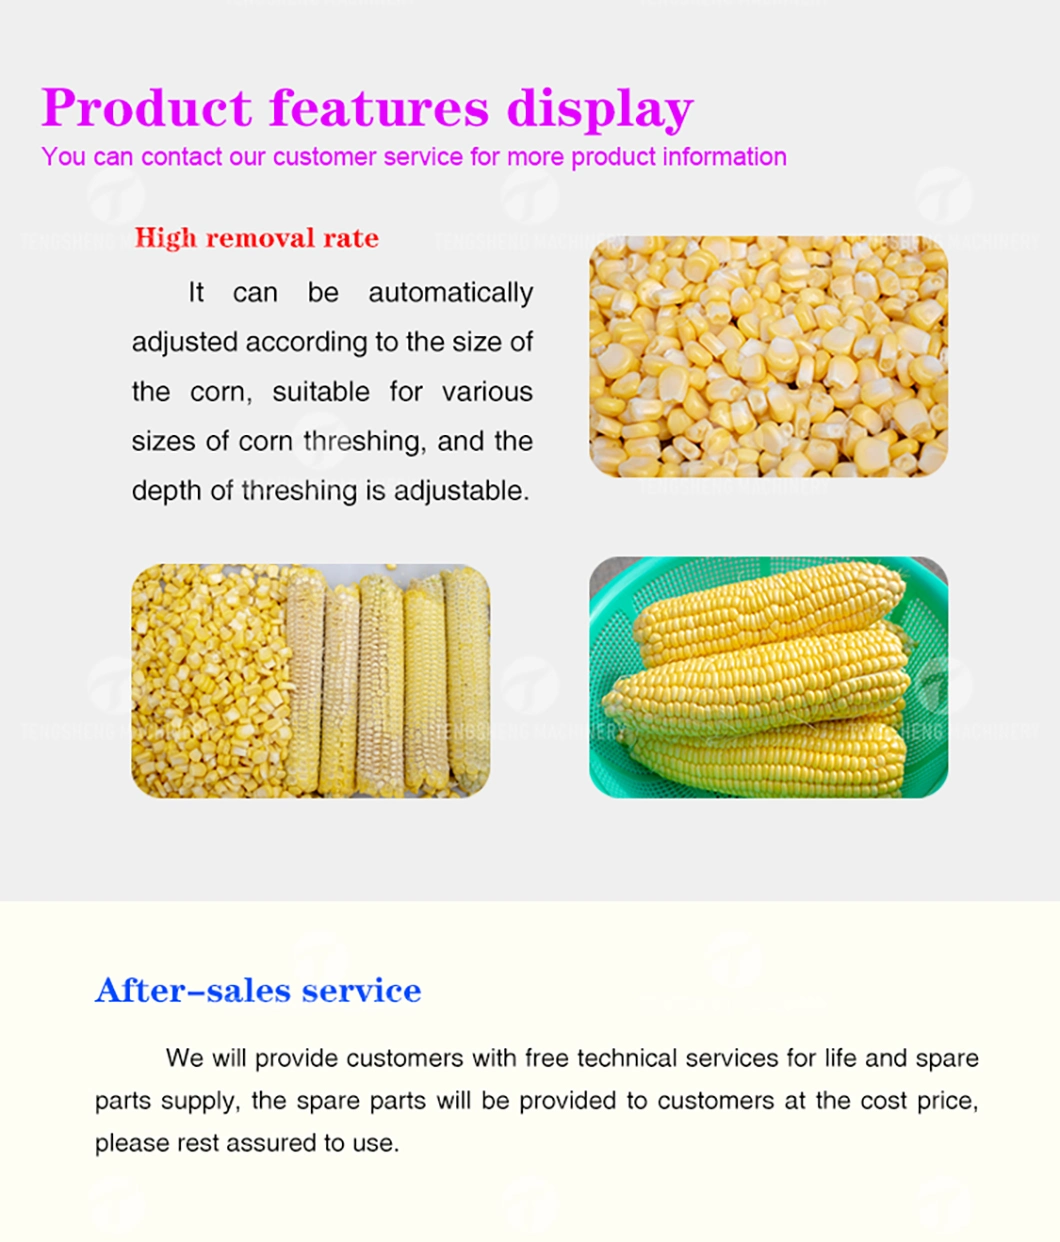 Industrial Stainless Steel Sweet Corn Thresher Fresh Corn Sheller Machine Food Processor (TS-W168L)